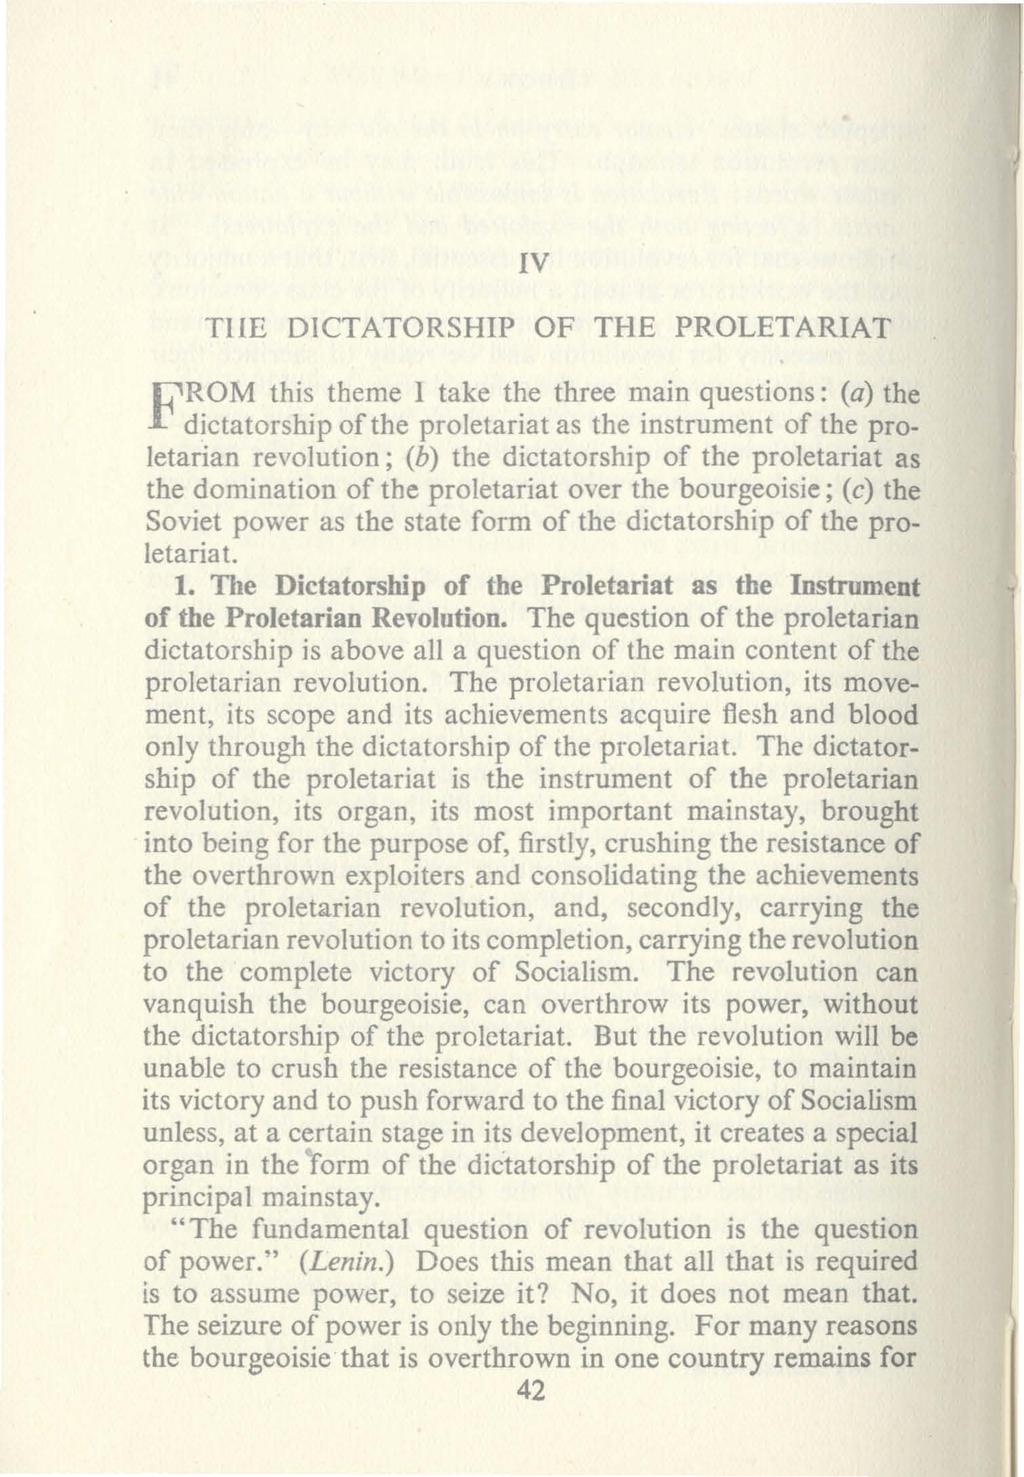 IV TIlE DICTATORSHIP OF THE PROLETARIAT F~~~O~~~~;~~~hee Ip:~~e~a~~;t ~~r~~e~:~~r~~:s~~o~; ~h~)p~~~ letarian revolution; (b) the dictatorship of the proleta riat as the domination of the proletariat